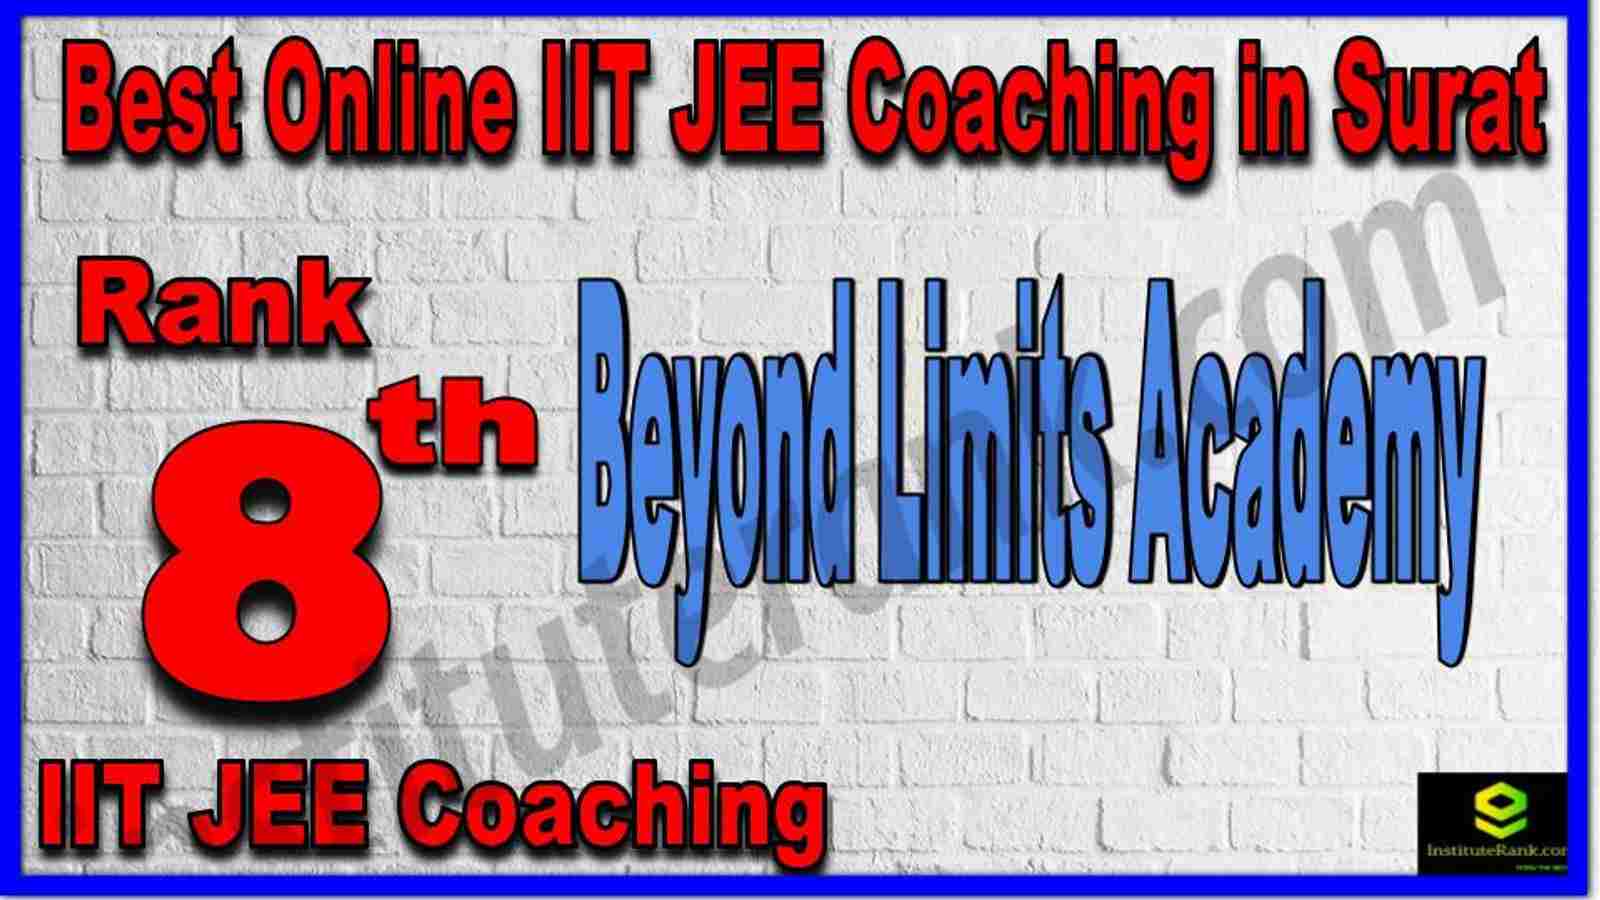 Rank 8th Best Online IIT JEE Coaching in Surat